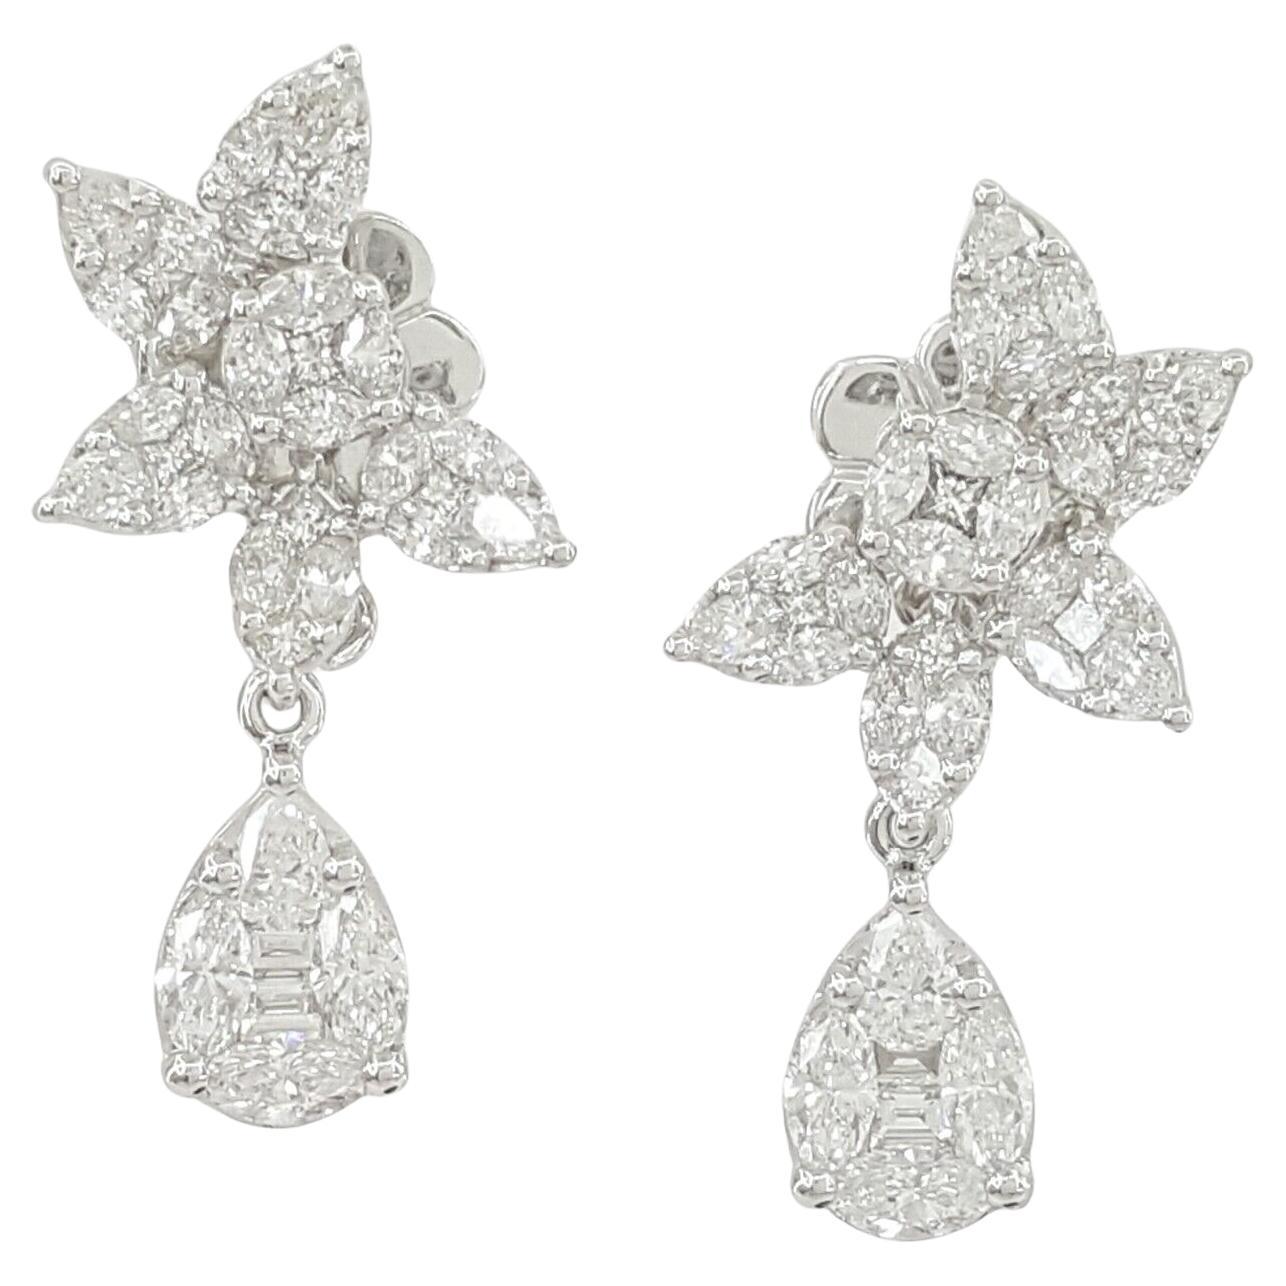  3 ct Pear, Marquise, Princess & Baguette Cut Diamond Pear Shape Cluster Drop/Dangle Earrings.